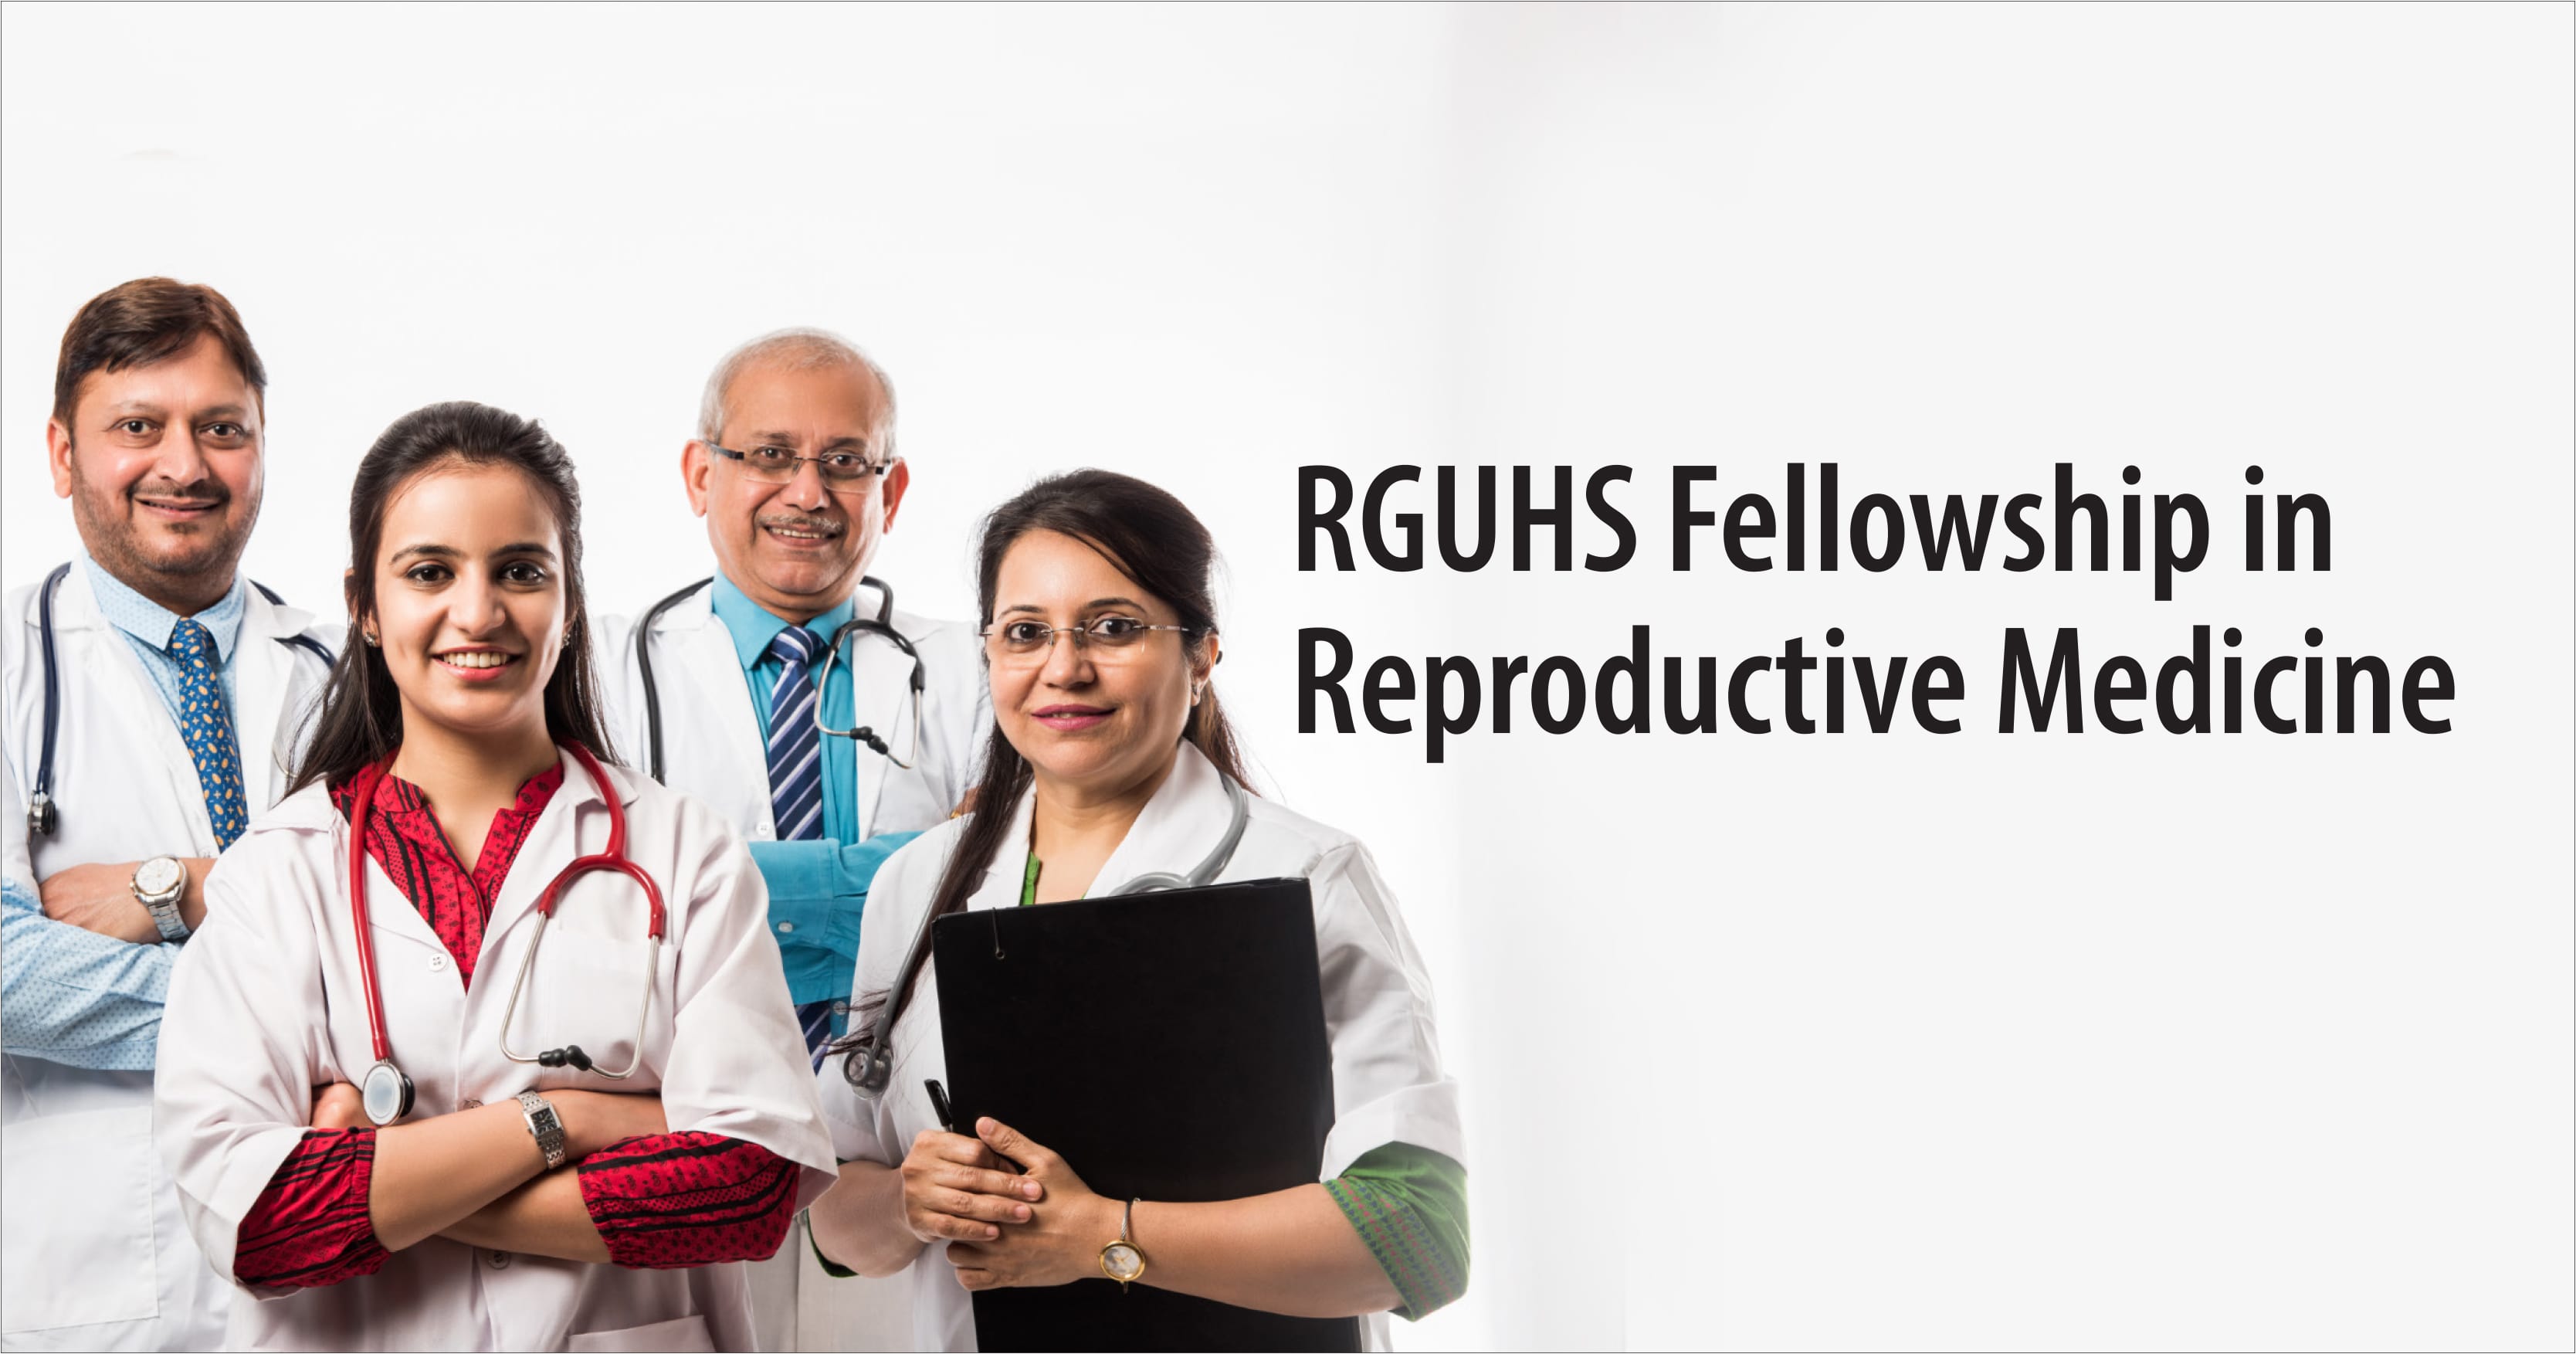 RGUHS Fellowship in Reproductive Medicine